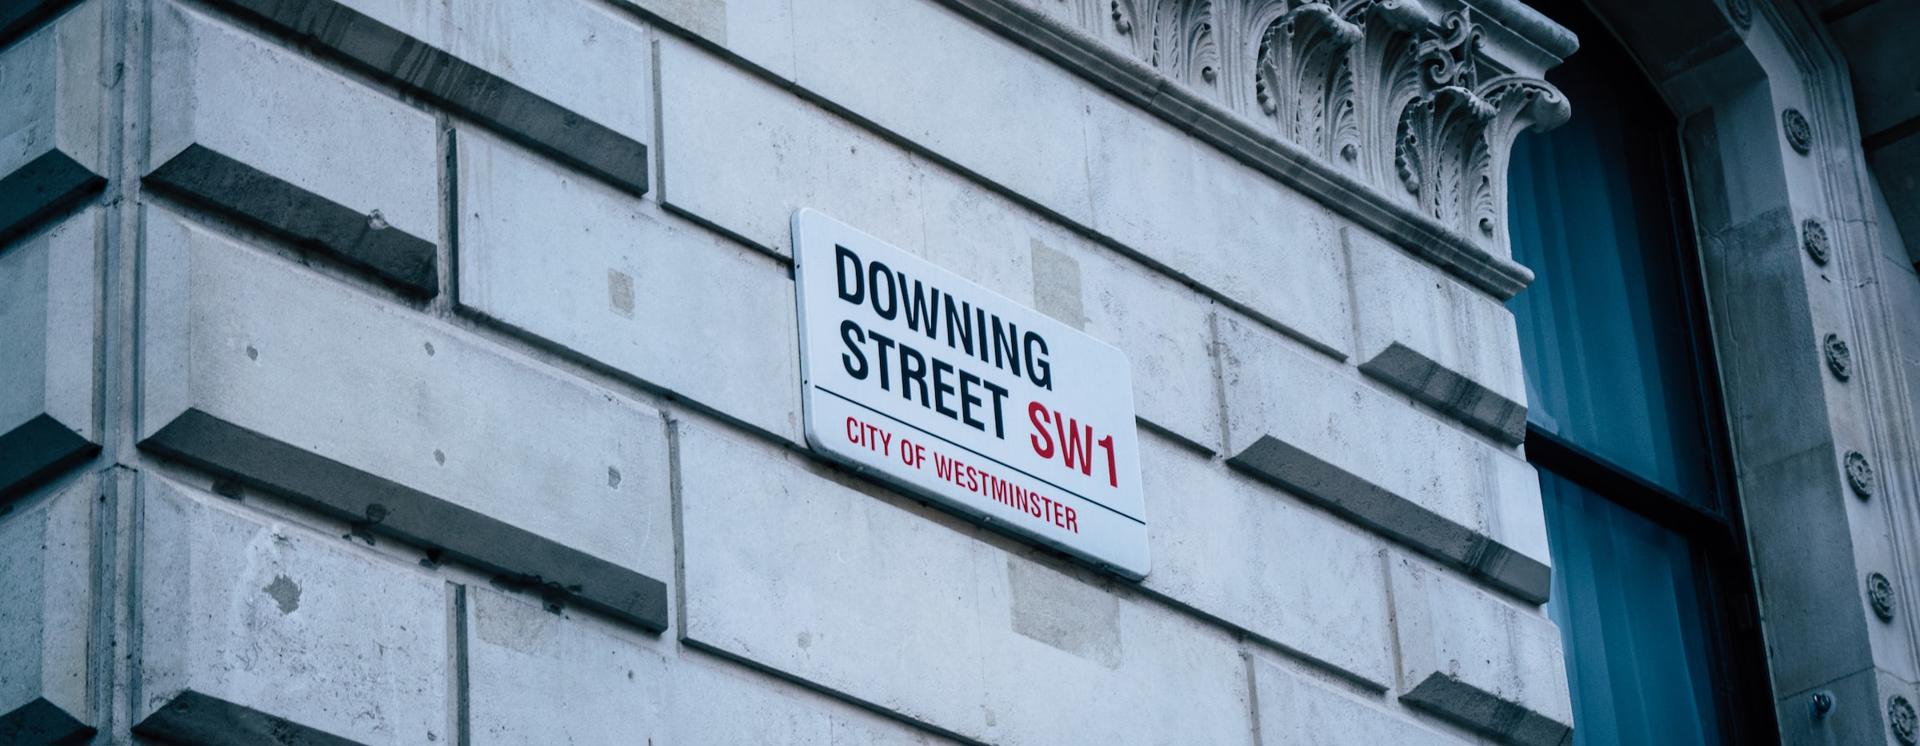 Downing Street SW1 street sign